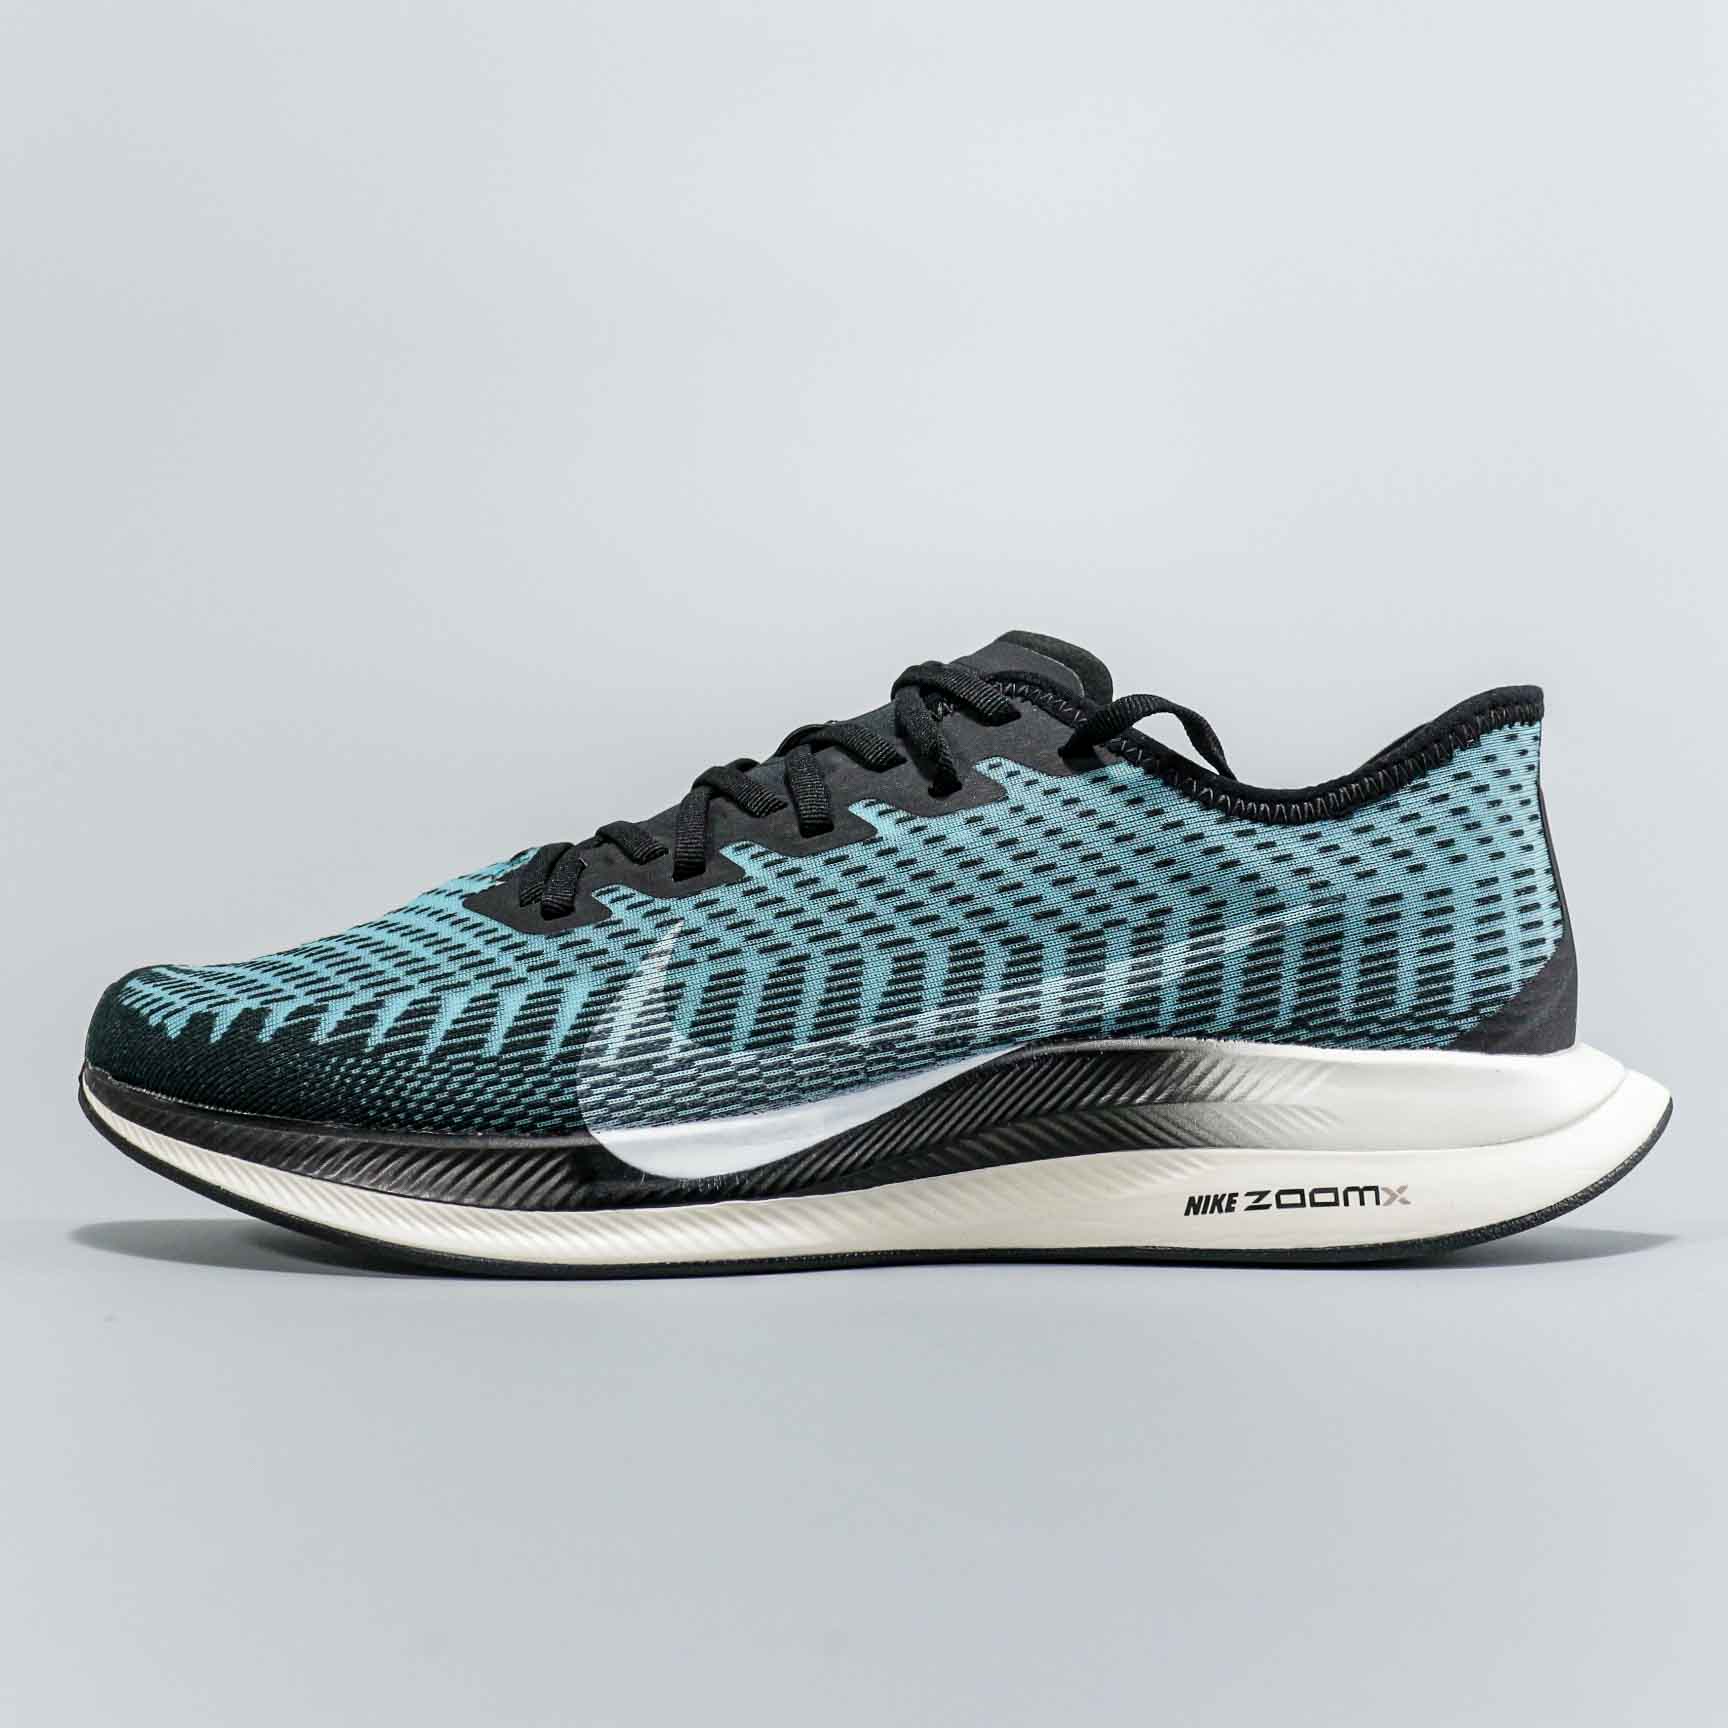 2020 Nike Zoom Pegasus Turbo 2 Blue Black White Running Shoes